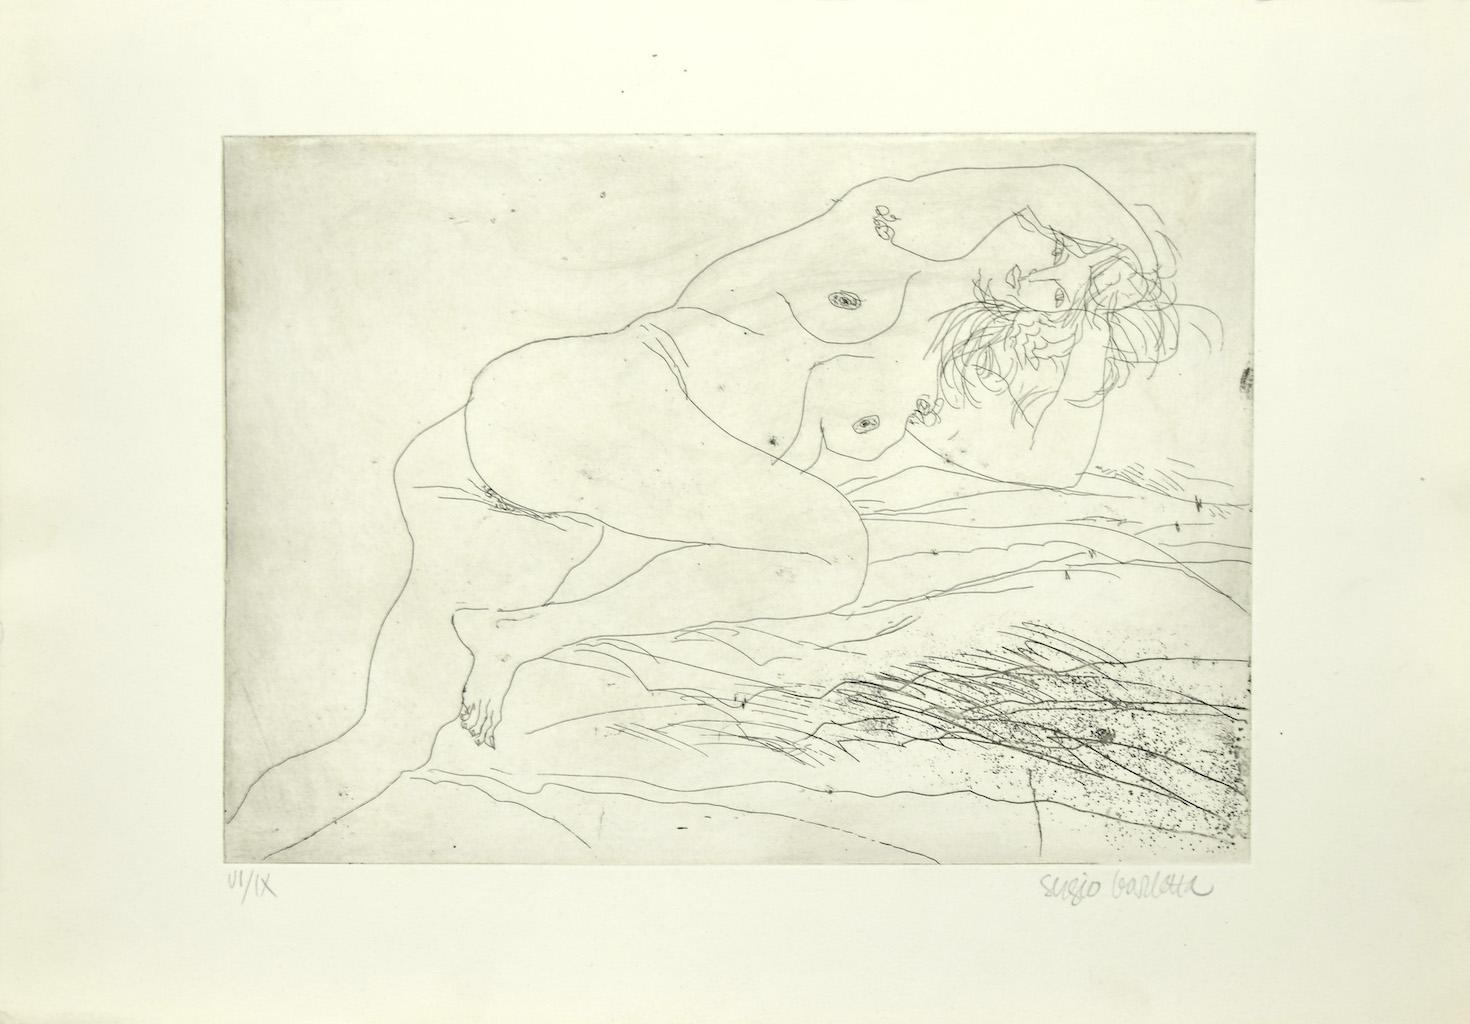 Gravure originale d'un nu par Sergio Barletta, 1975 environ